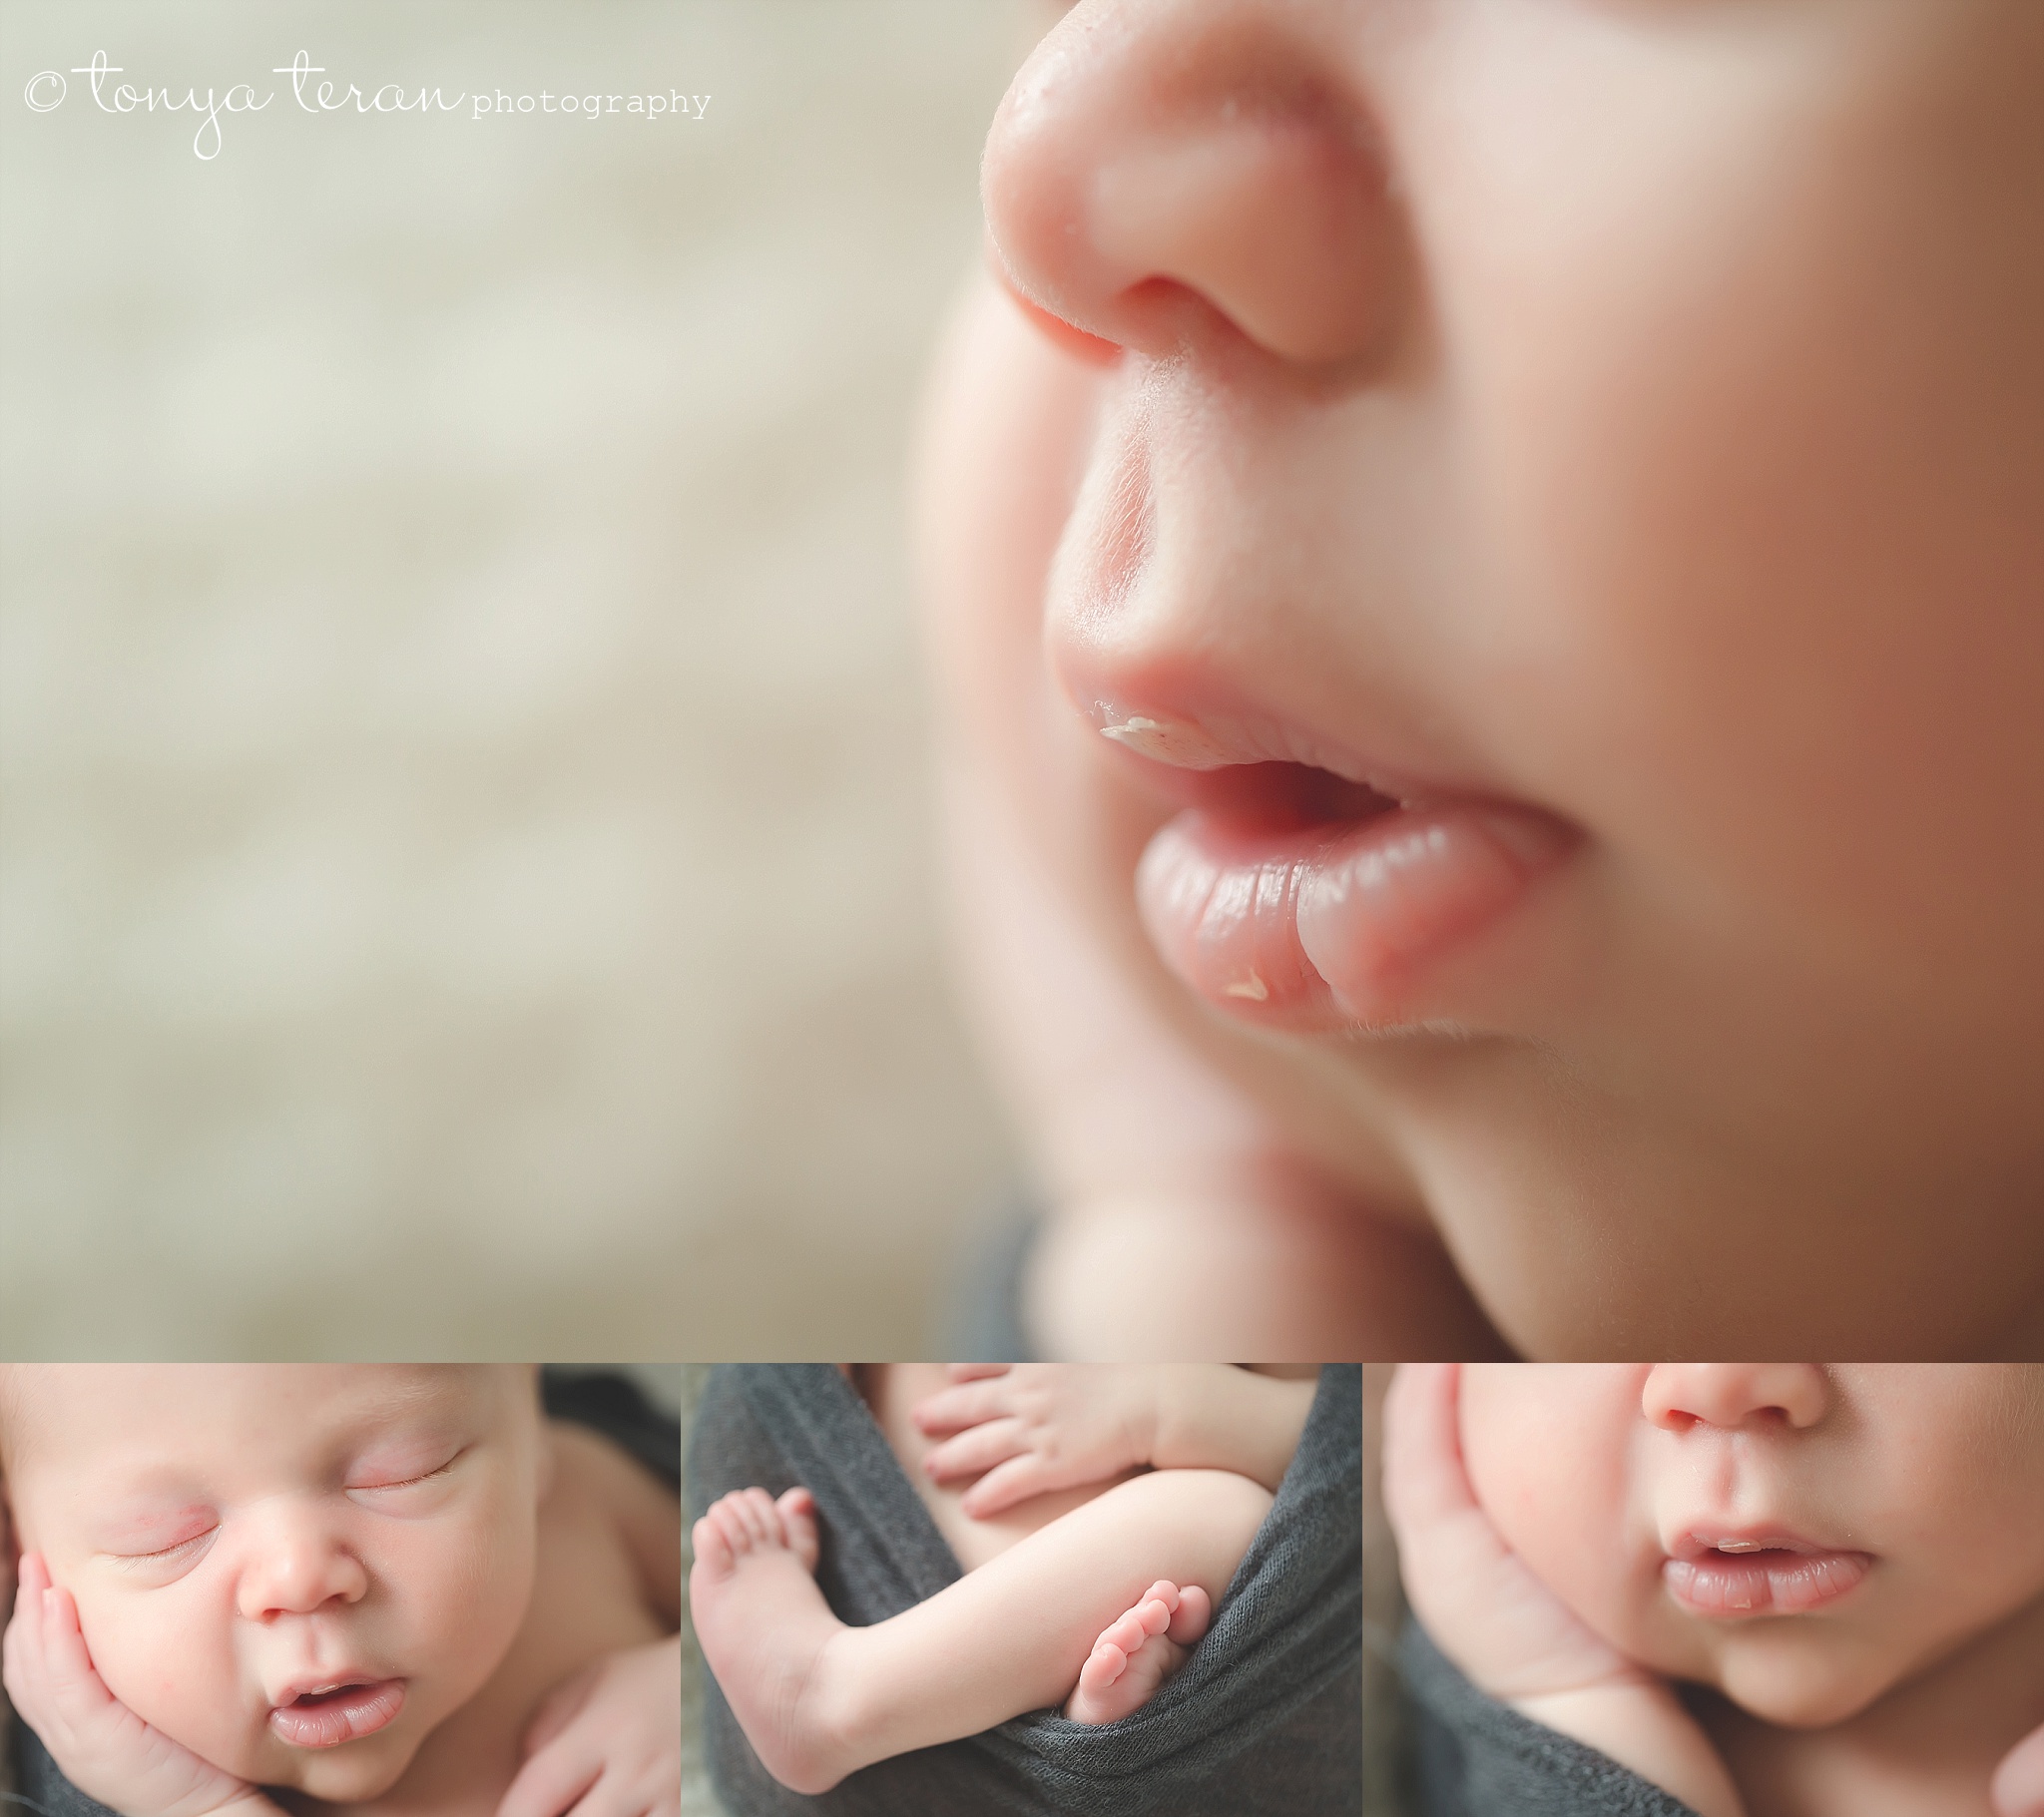 Newborn Photo Session | Tonya Teran Photography, McLean, VA Newborn, Baby, and Family Photographer